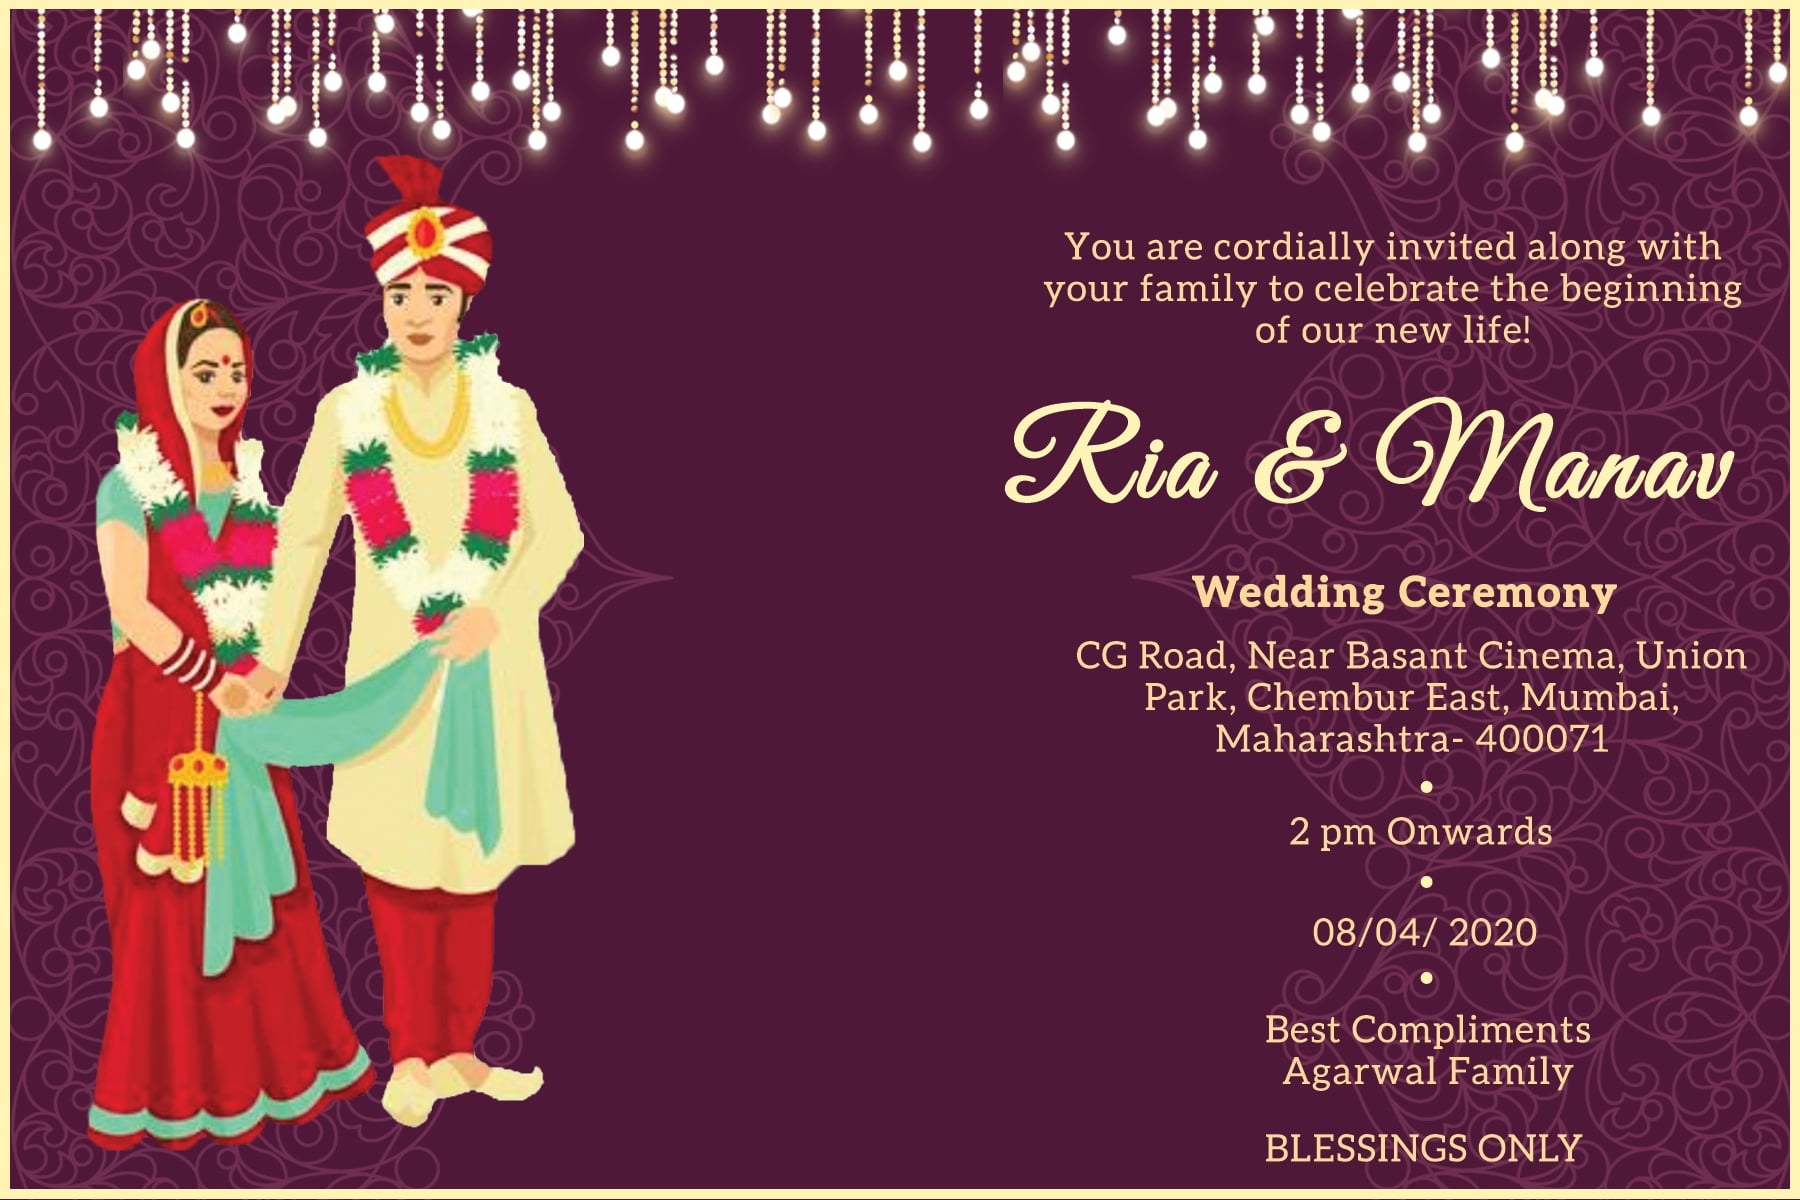 Customized Couple WhatsApp wedding invitation ecard